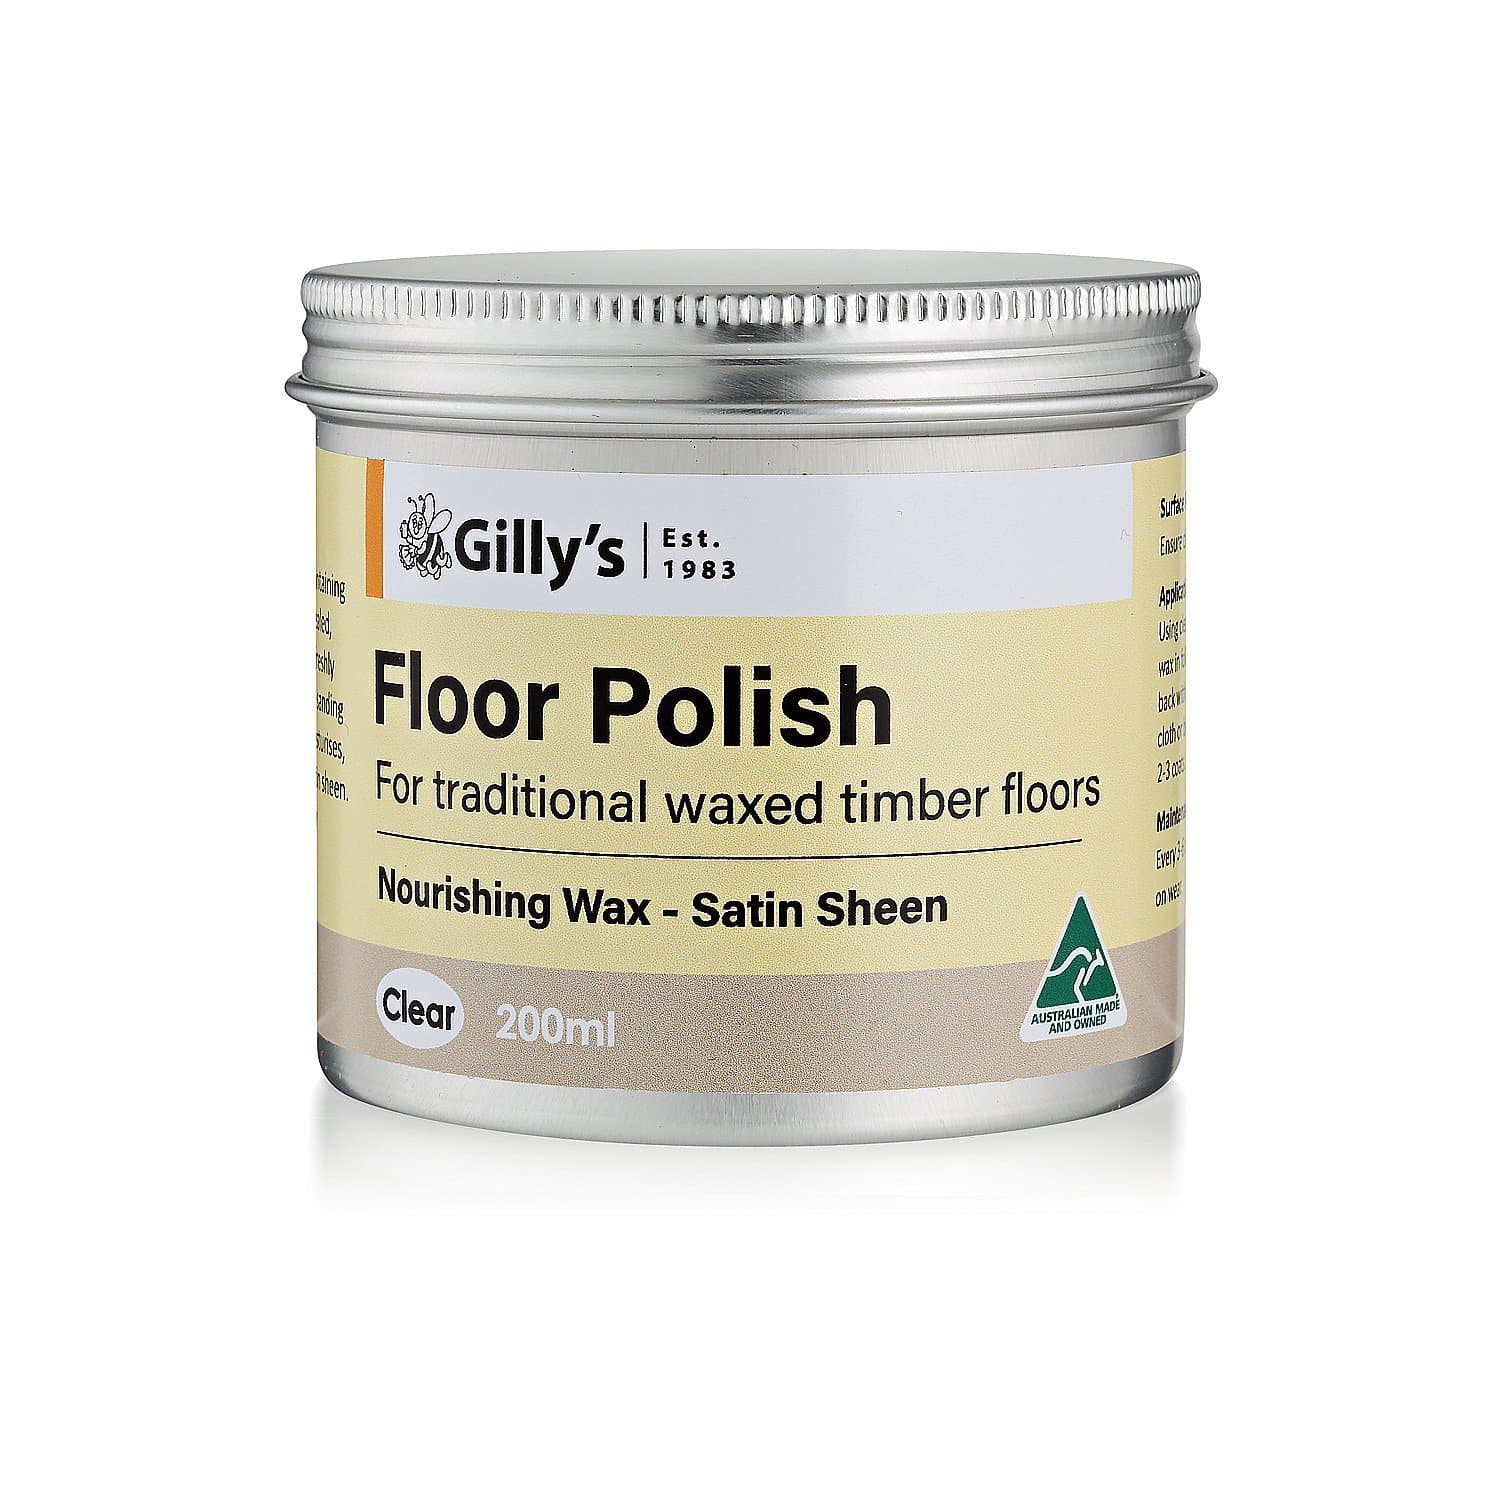 Gilly's Waxes & Polishes Floor Polish Clear 200ml FP200MLCL - Double Bay Hardware